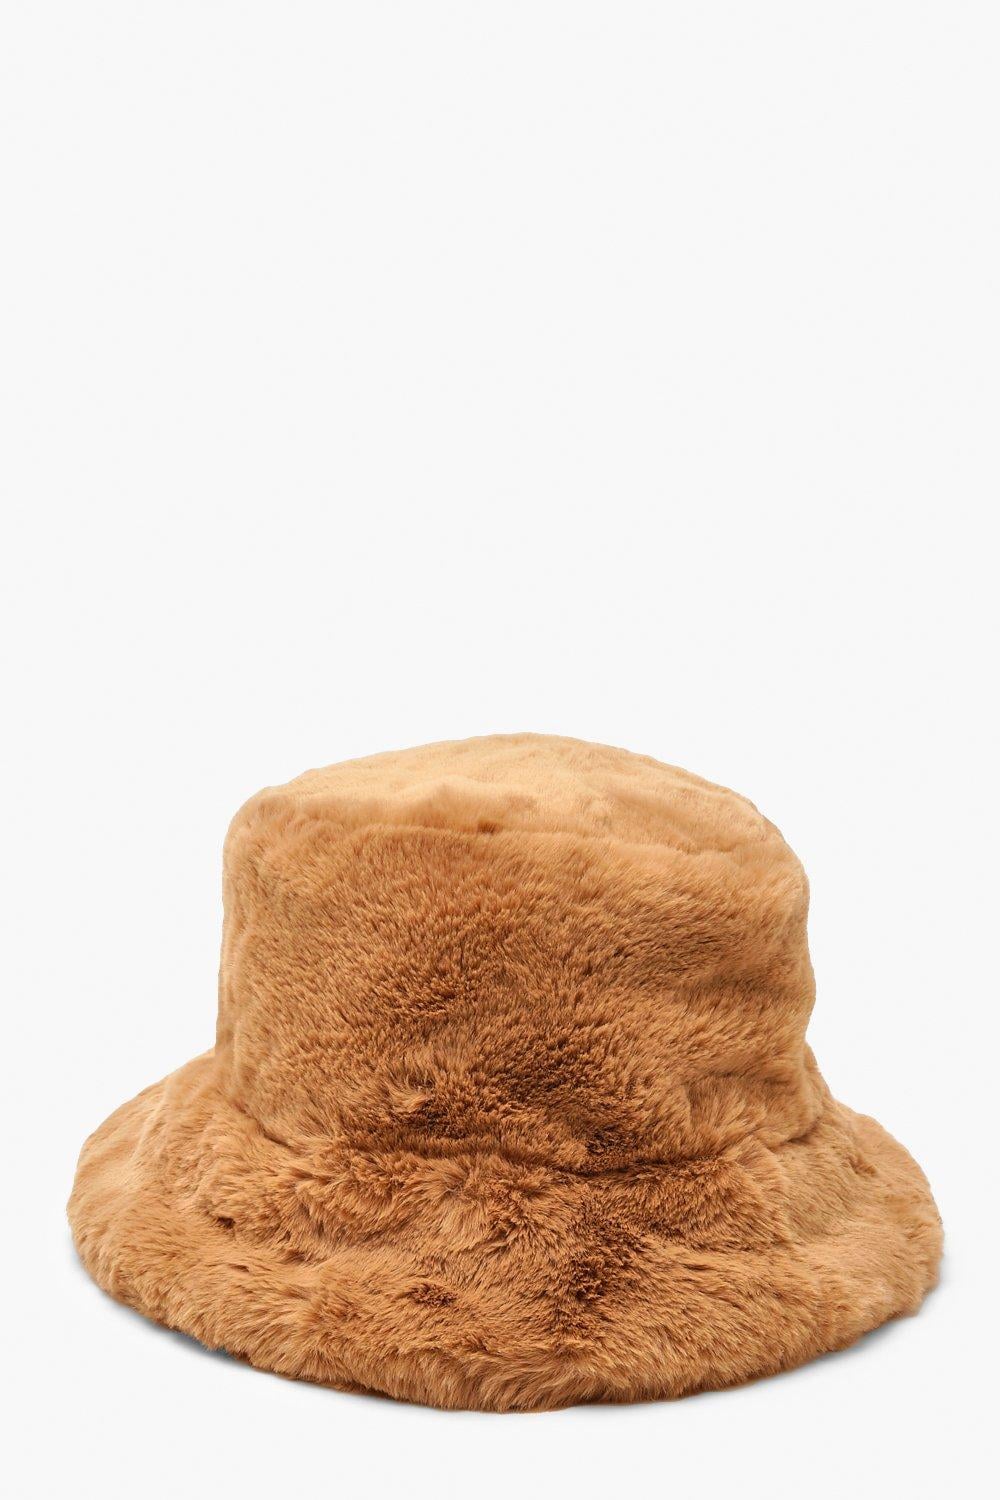 Shop Gigi Hadid's Mango Coat and Shearling LV Bucket Hat